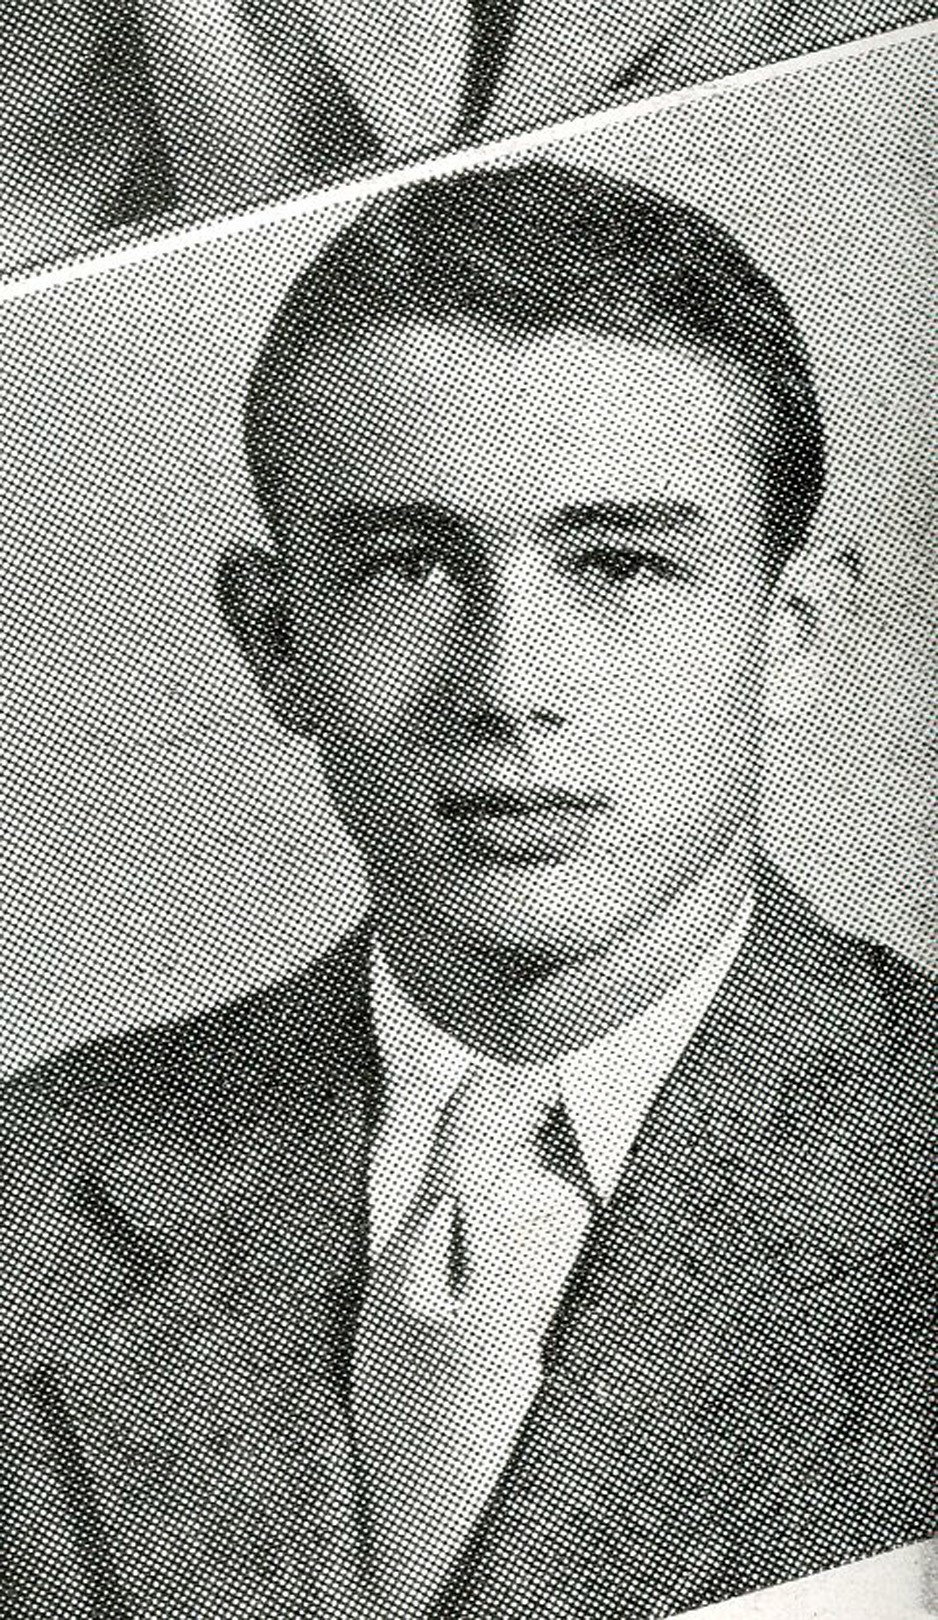 1949 James Dean High School Yearbook (ex-Seth Poppel Yearbook Library)